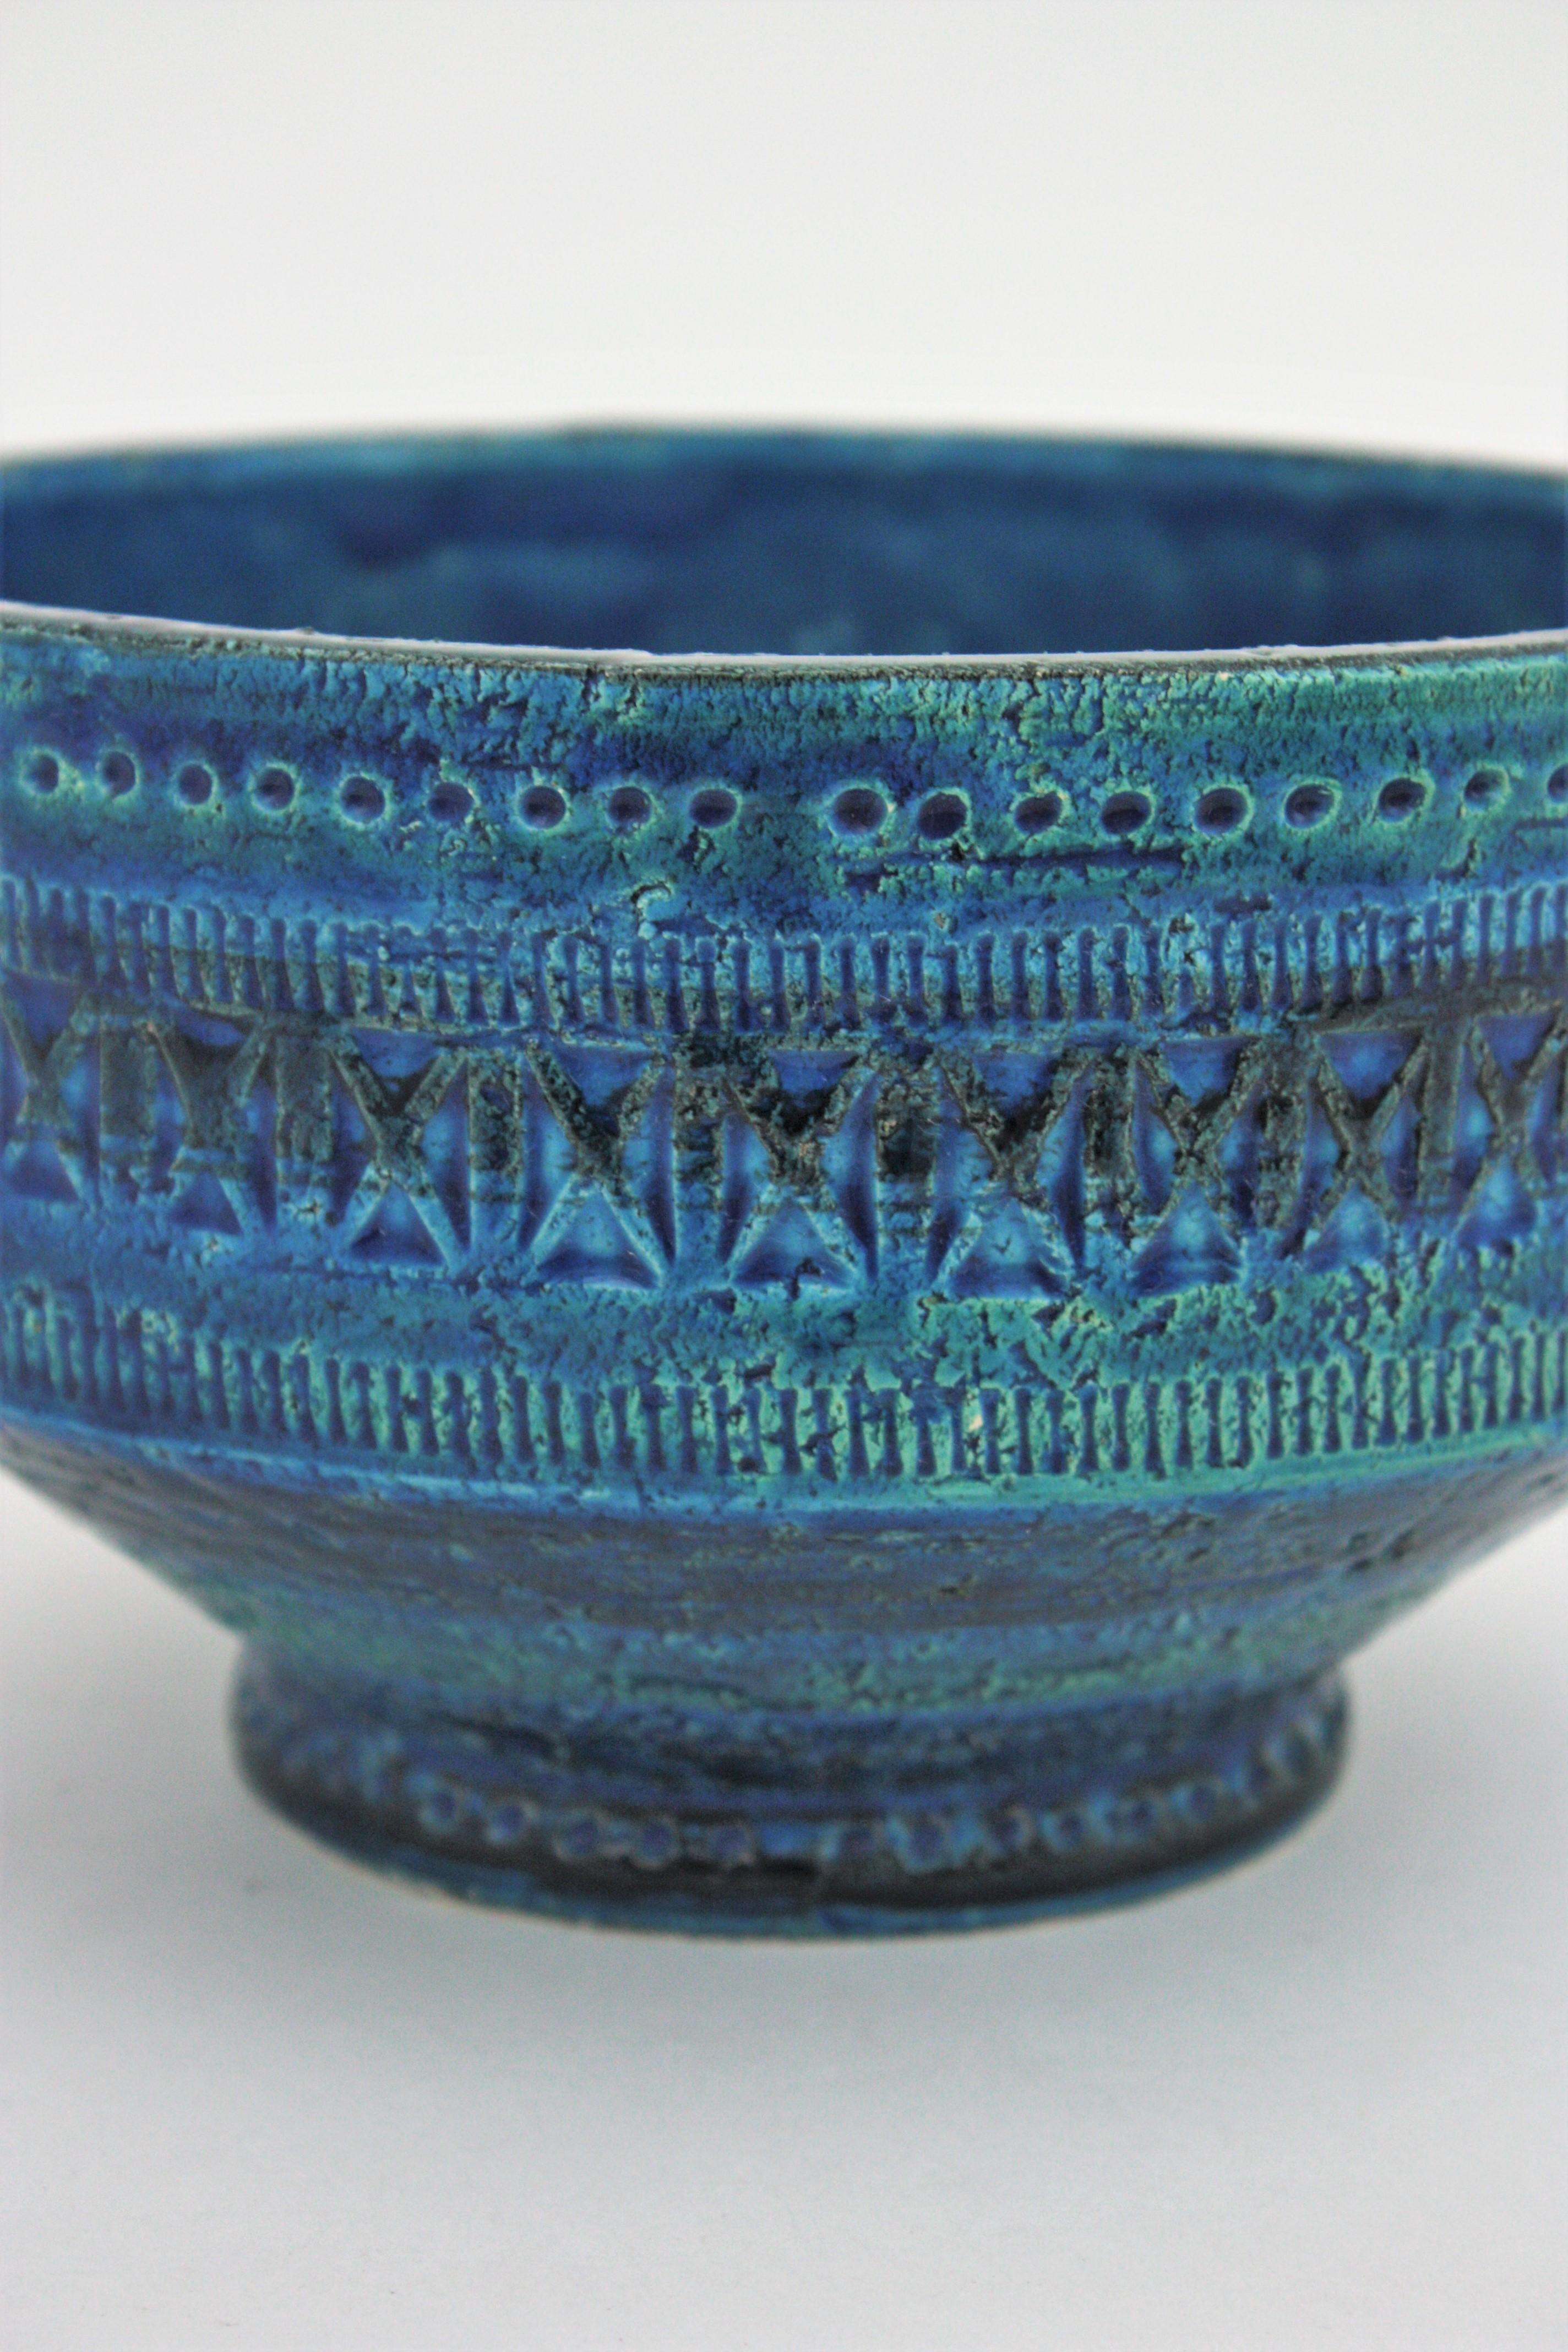 Bitossi Ando Londi Rimini Blue Glazed Ceramic Centerpiece or Fruit Bowl In Good Condition For Sale In Barcelona, ES